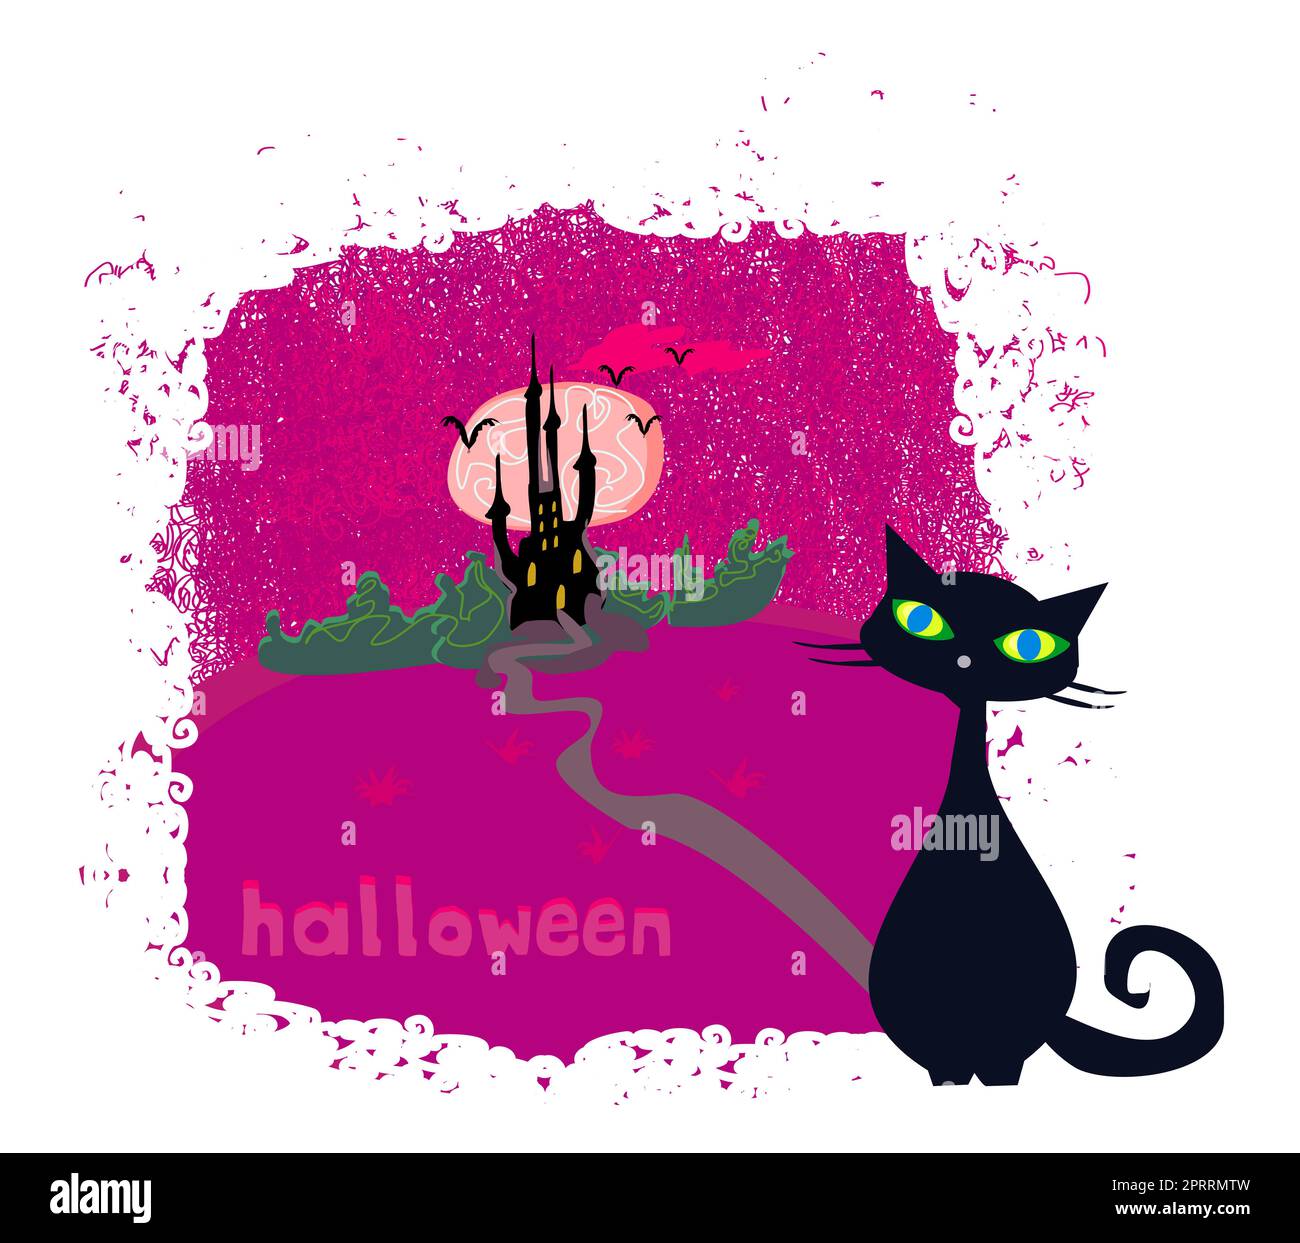 halloween invitation poster Stock Photo - Alamy